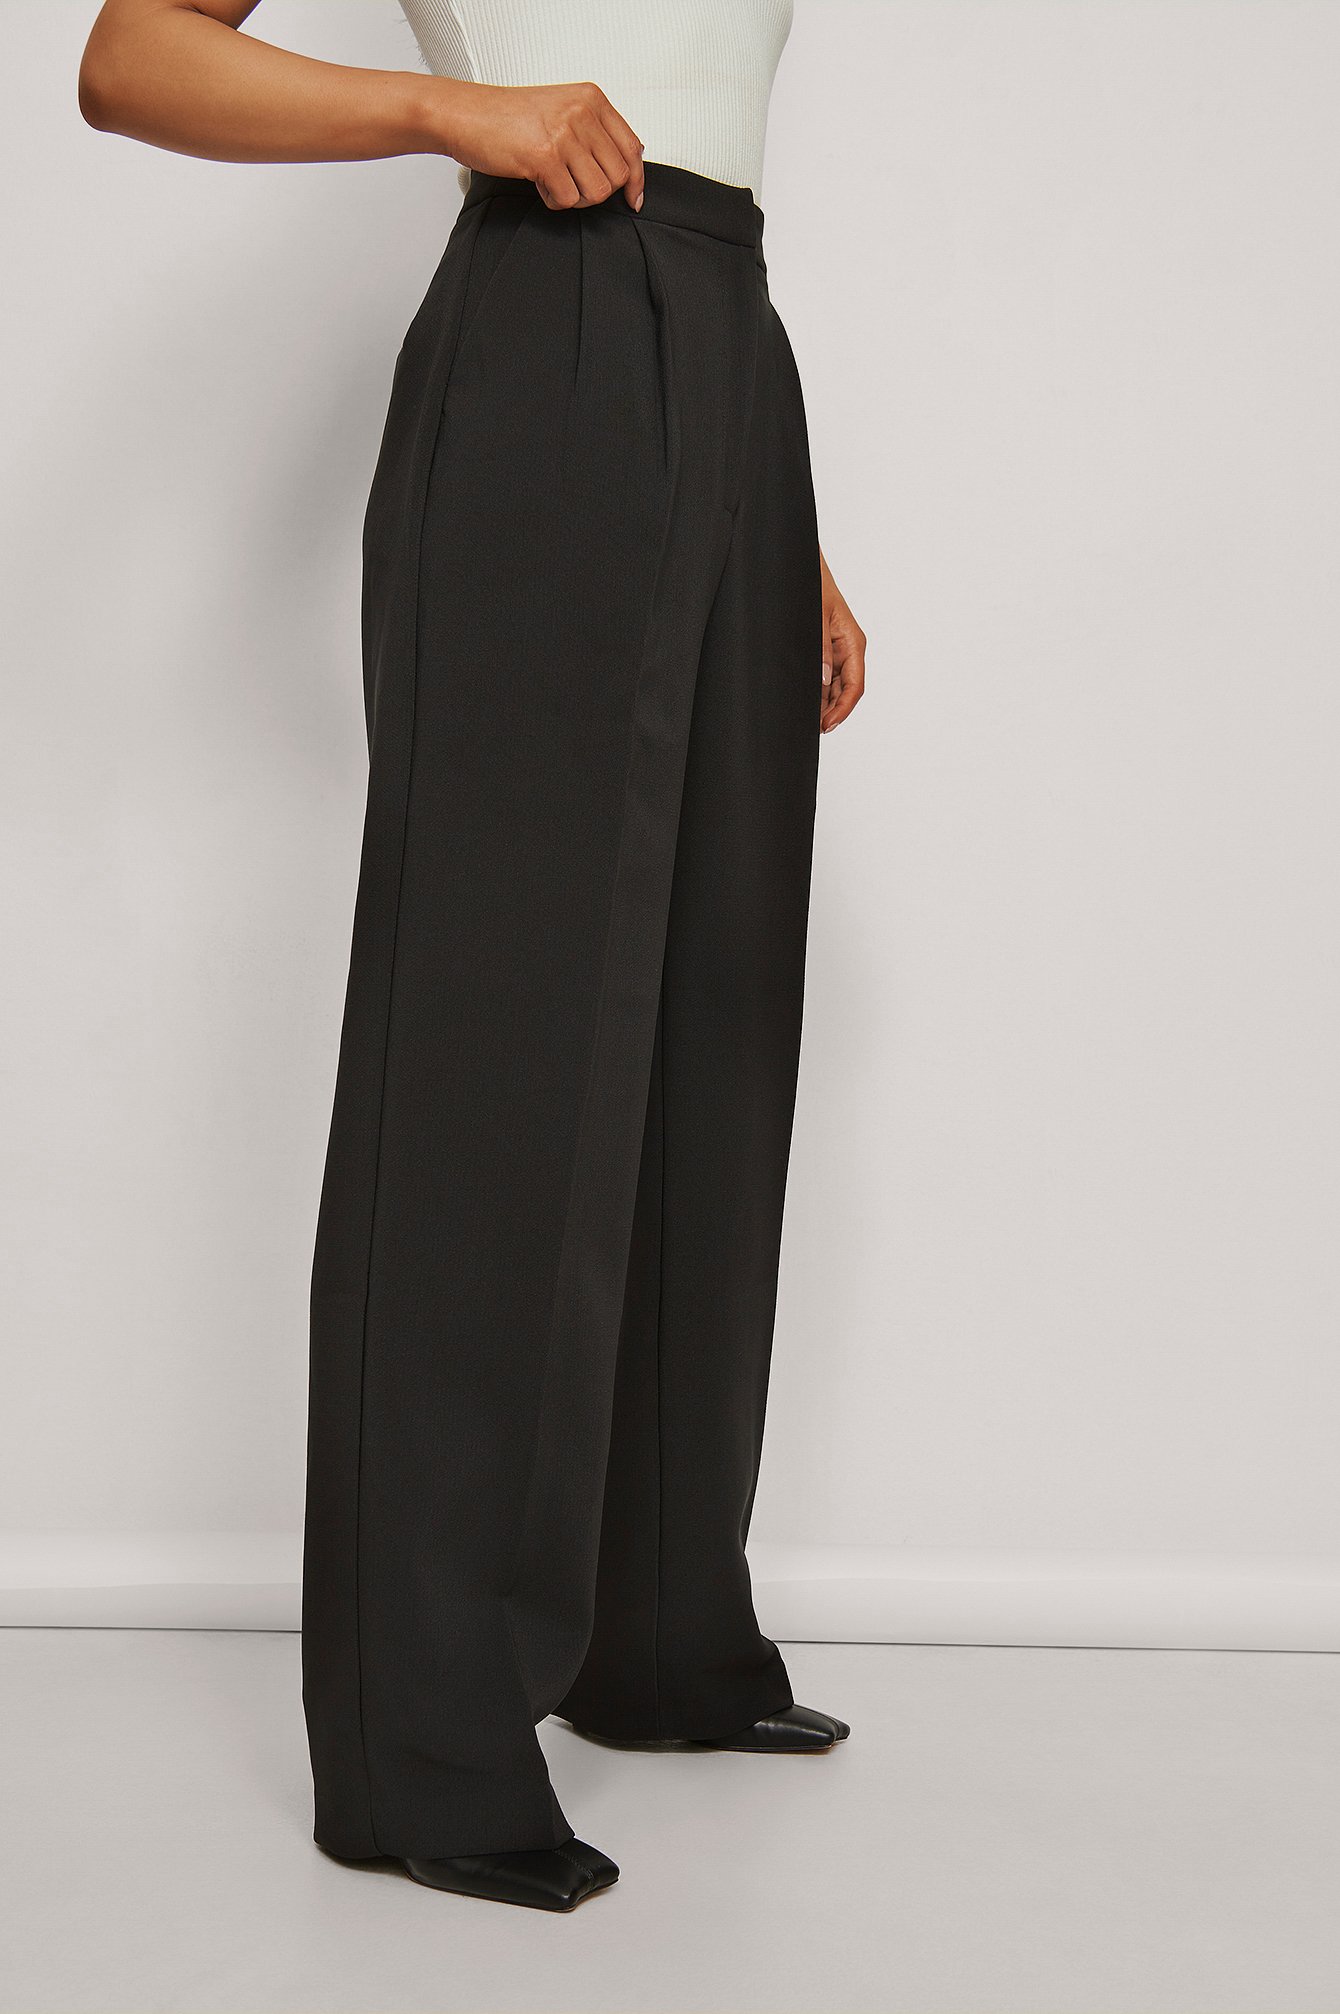 Black, S Women 2 Piece Outfits Long Sleeve Blazer & Short Pants Casual Tops & Bottoms Set 